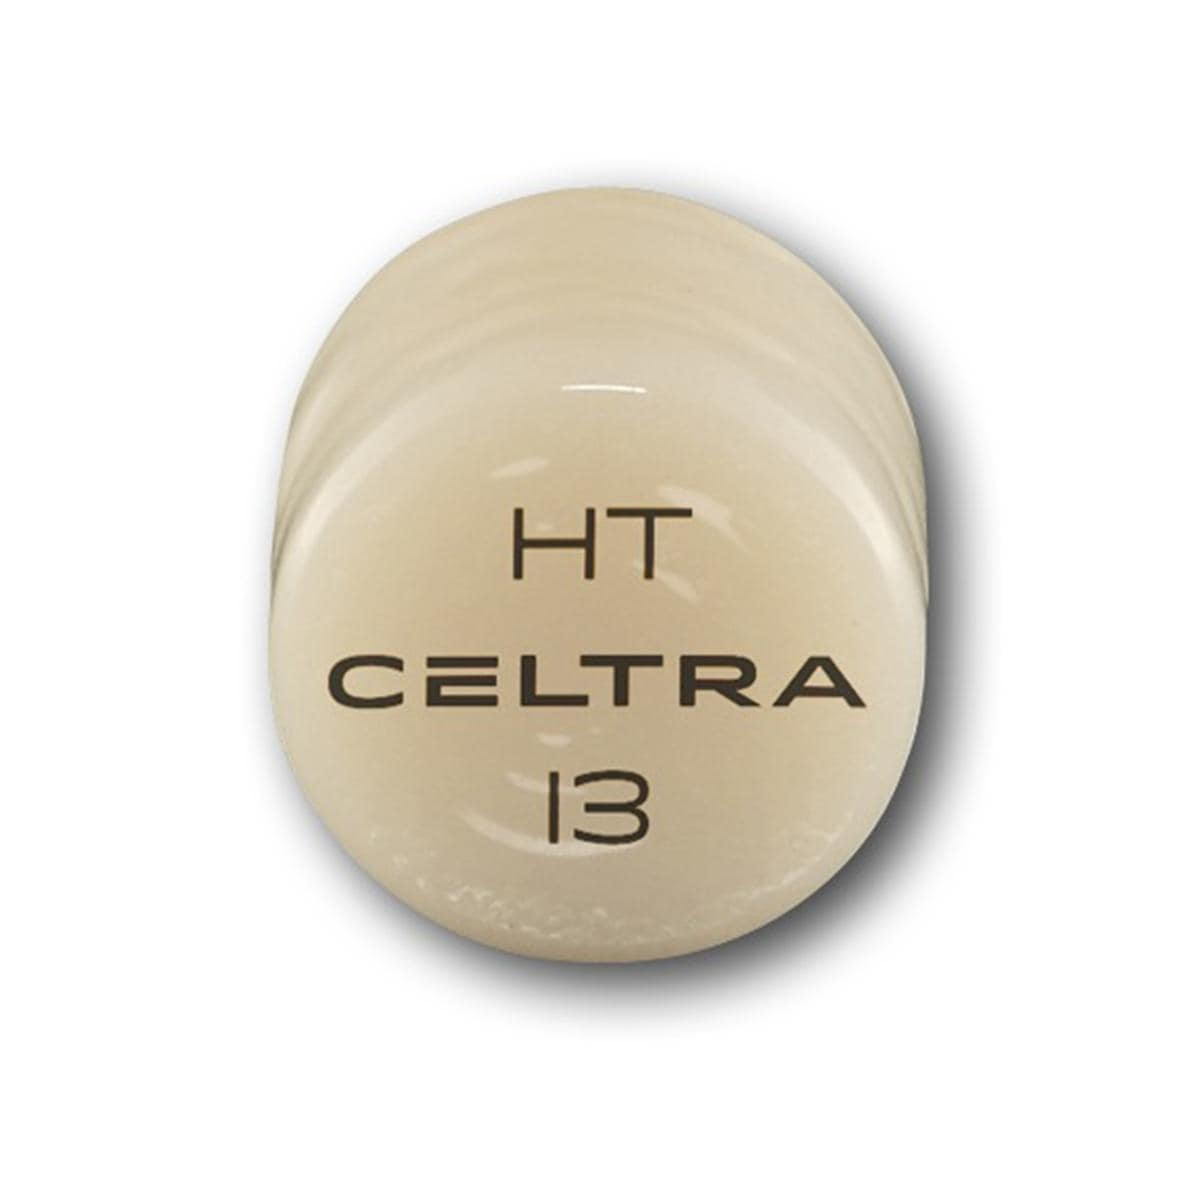 CELTRA® Press HT - I3, Packung 5 x 3 g